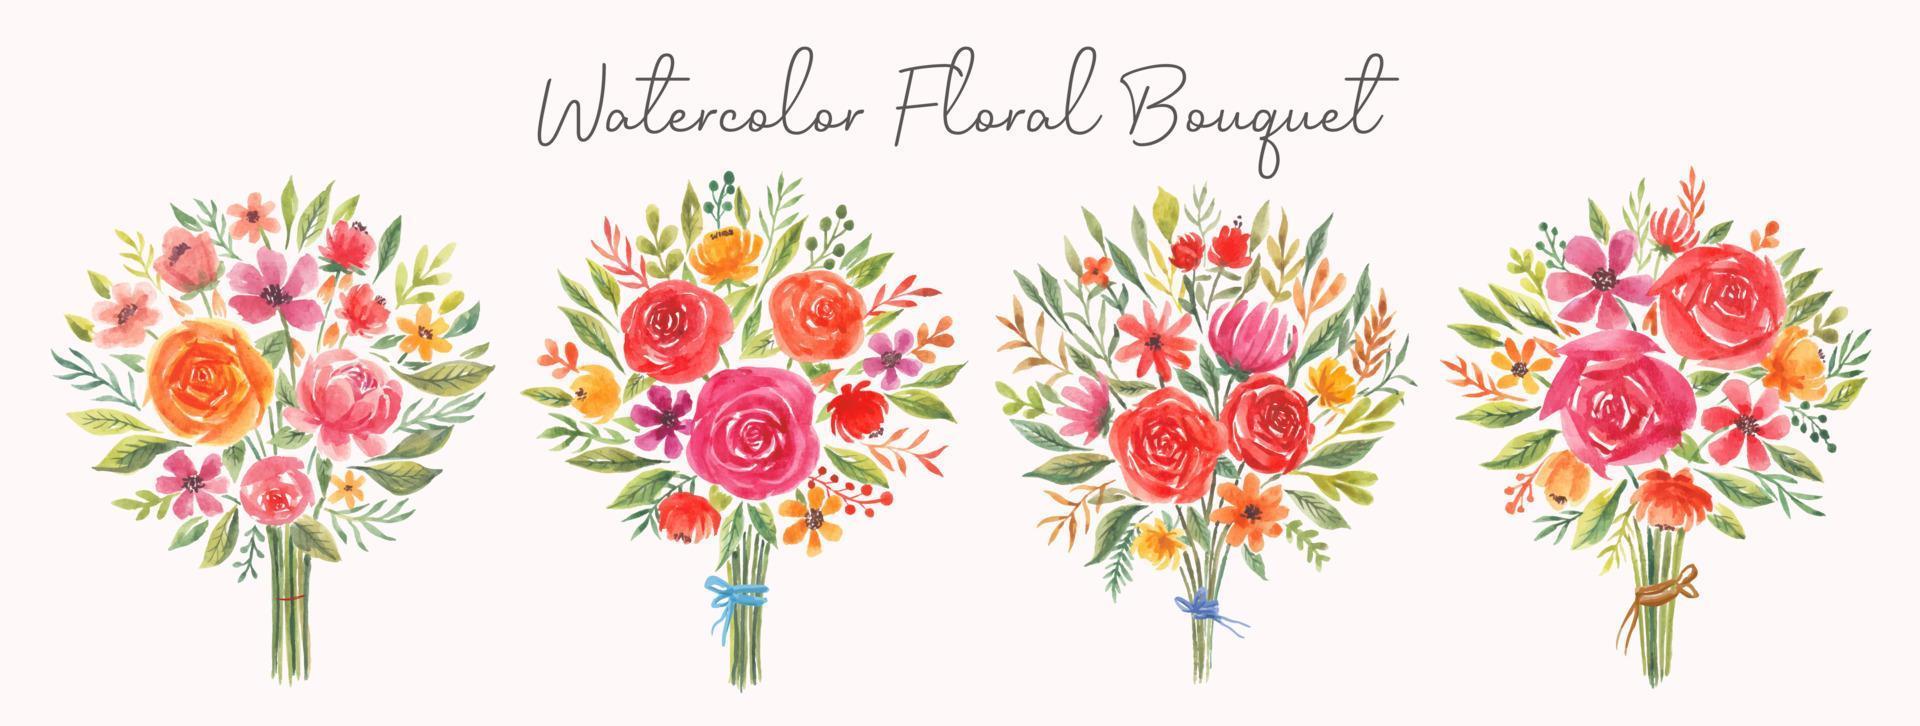 Watercolor wedding floral bouquets collection vector